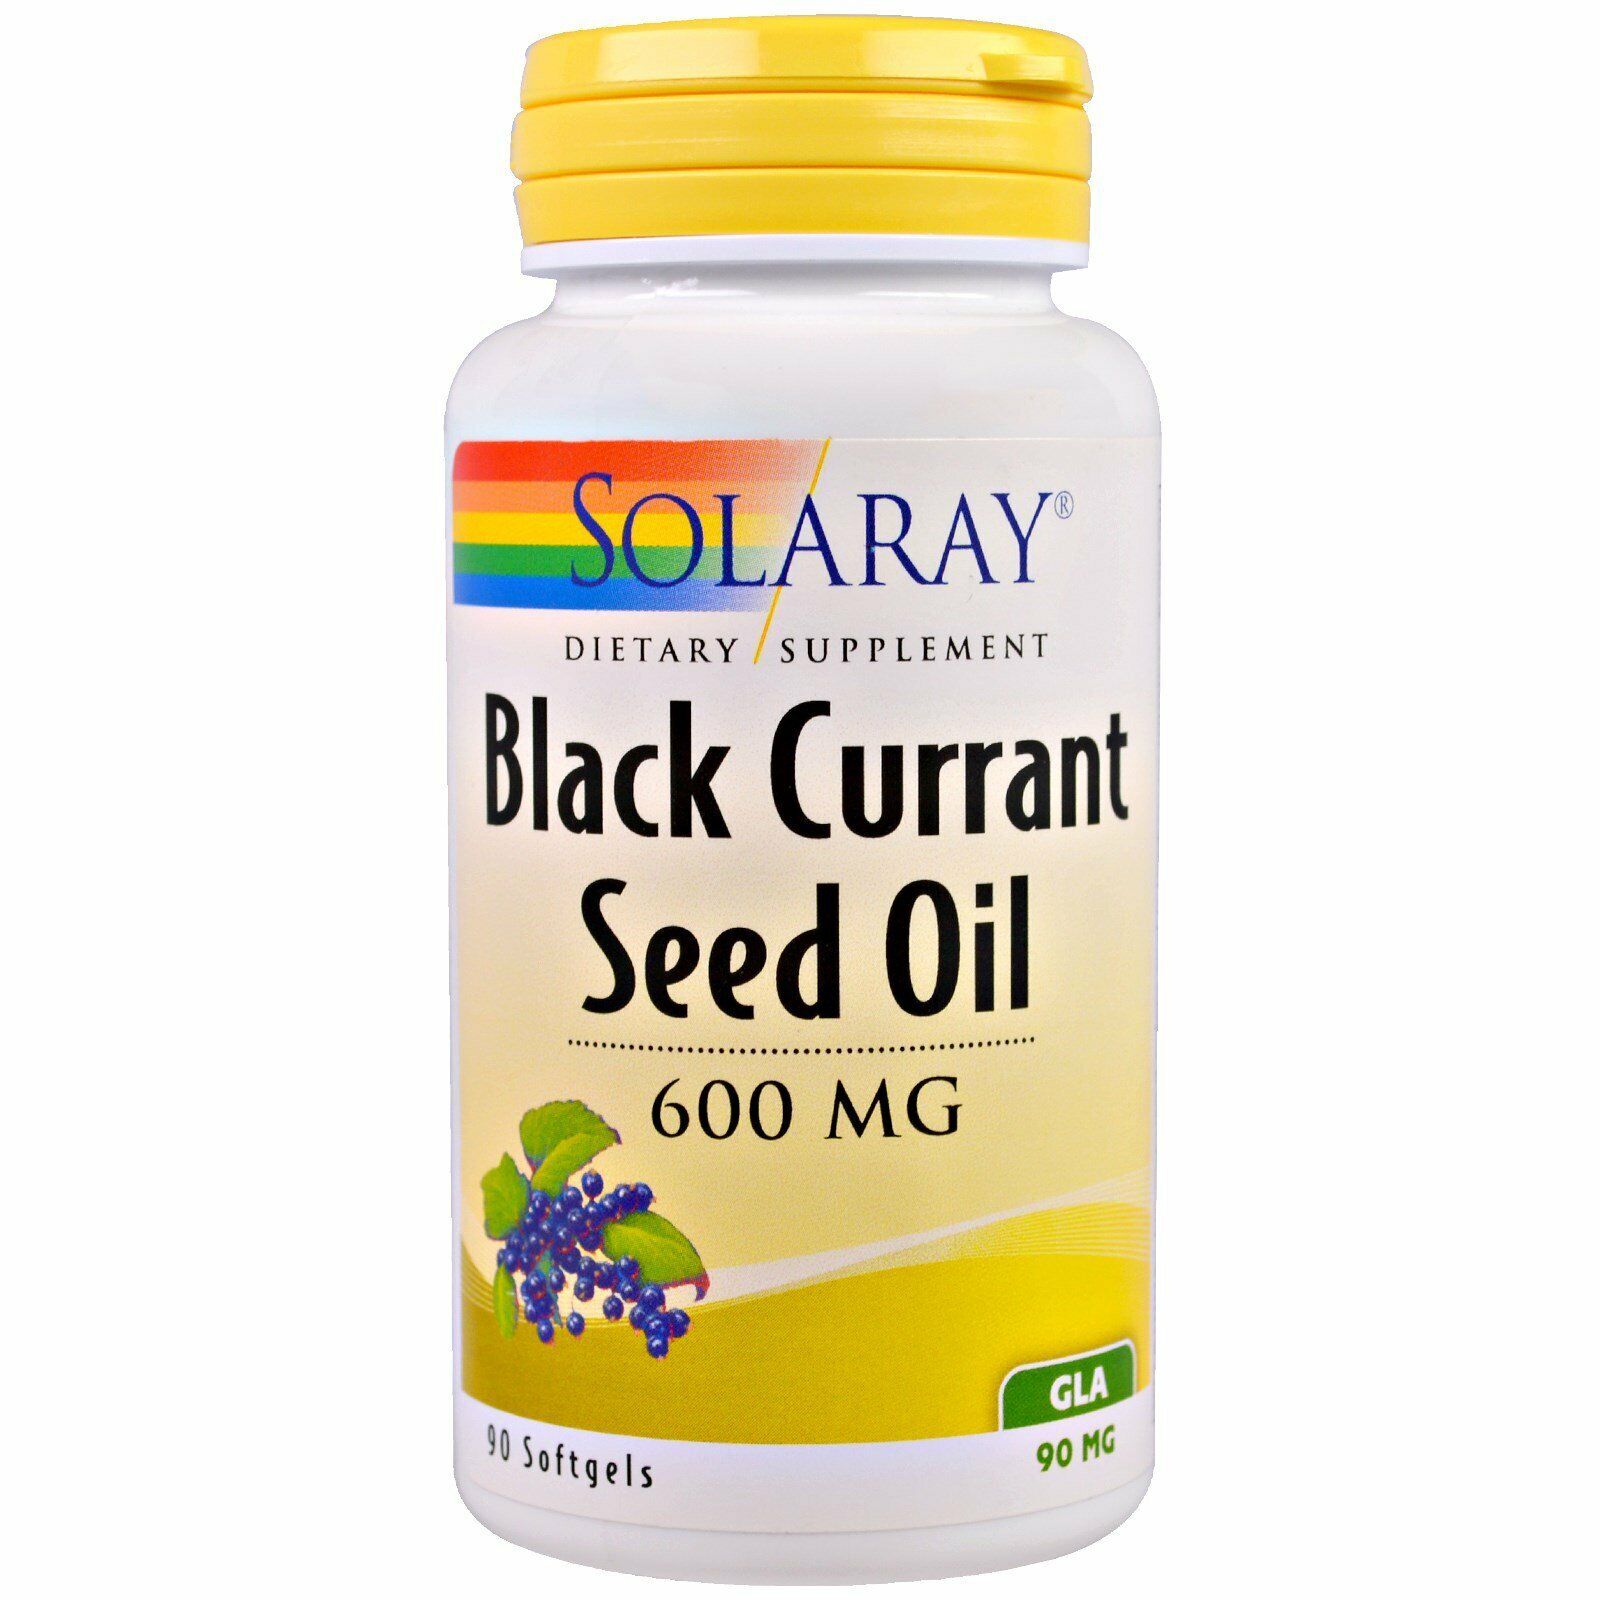 Solaray Black Currant Seed Oil 600 Mg, 90 Softgels